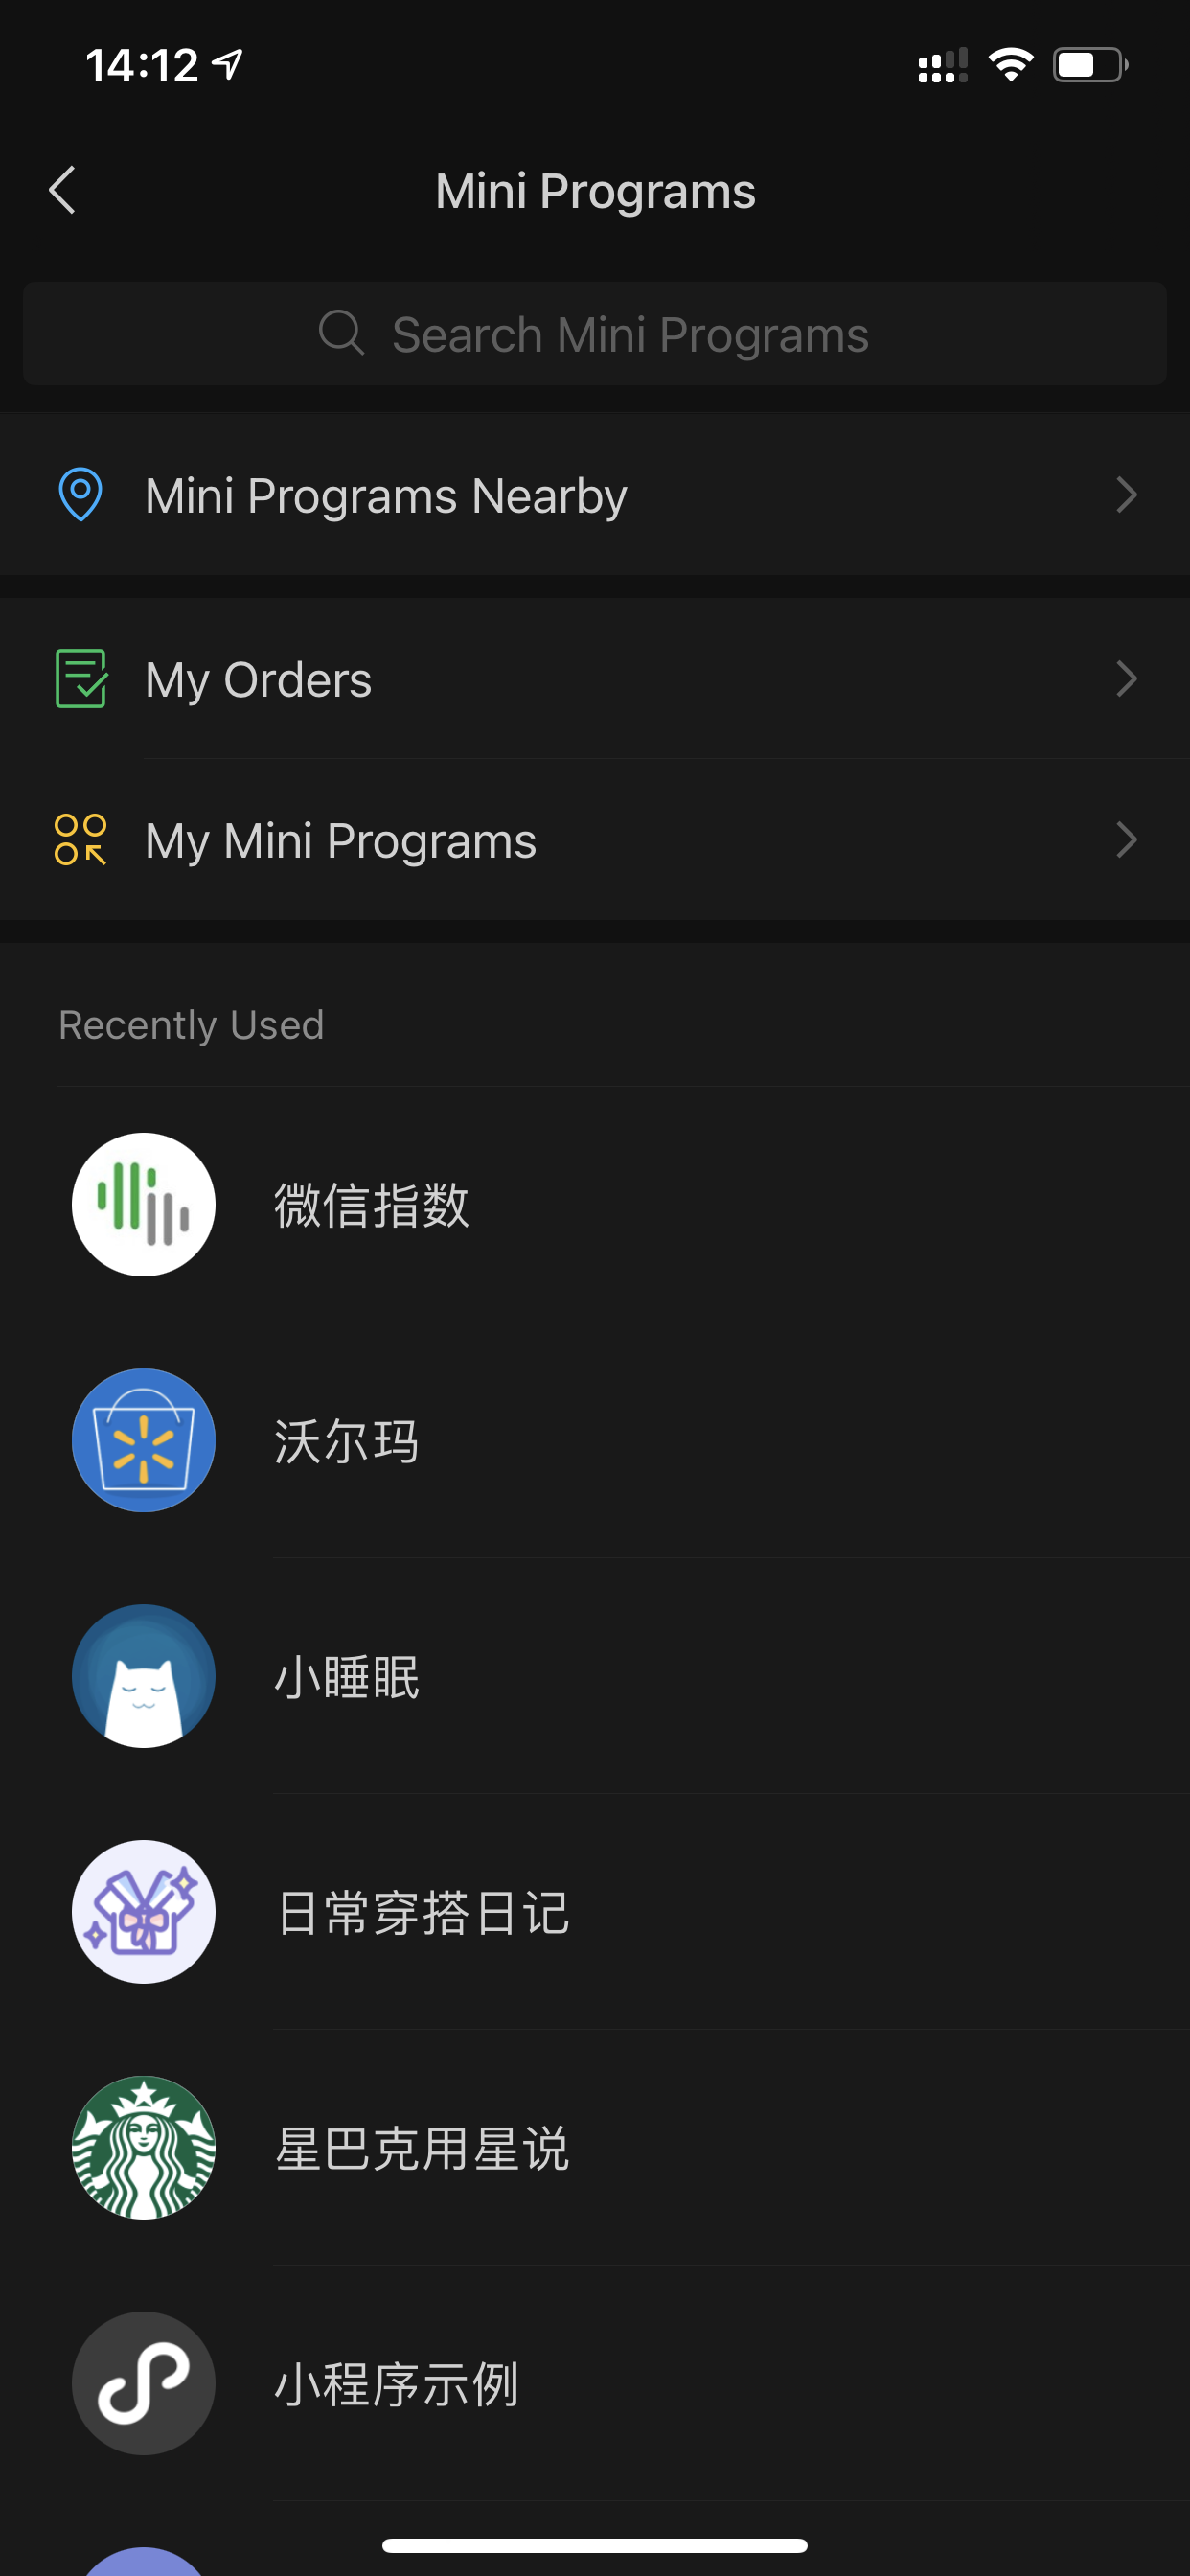 Lista de miniapps lançados recentemente no superapp WeChat.